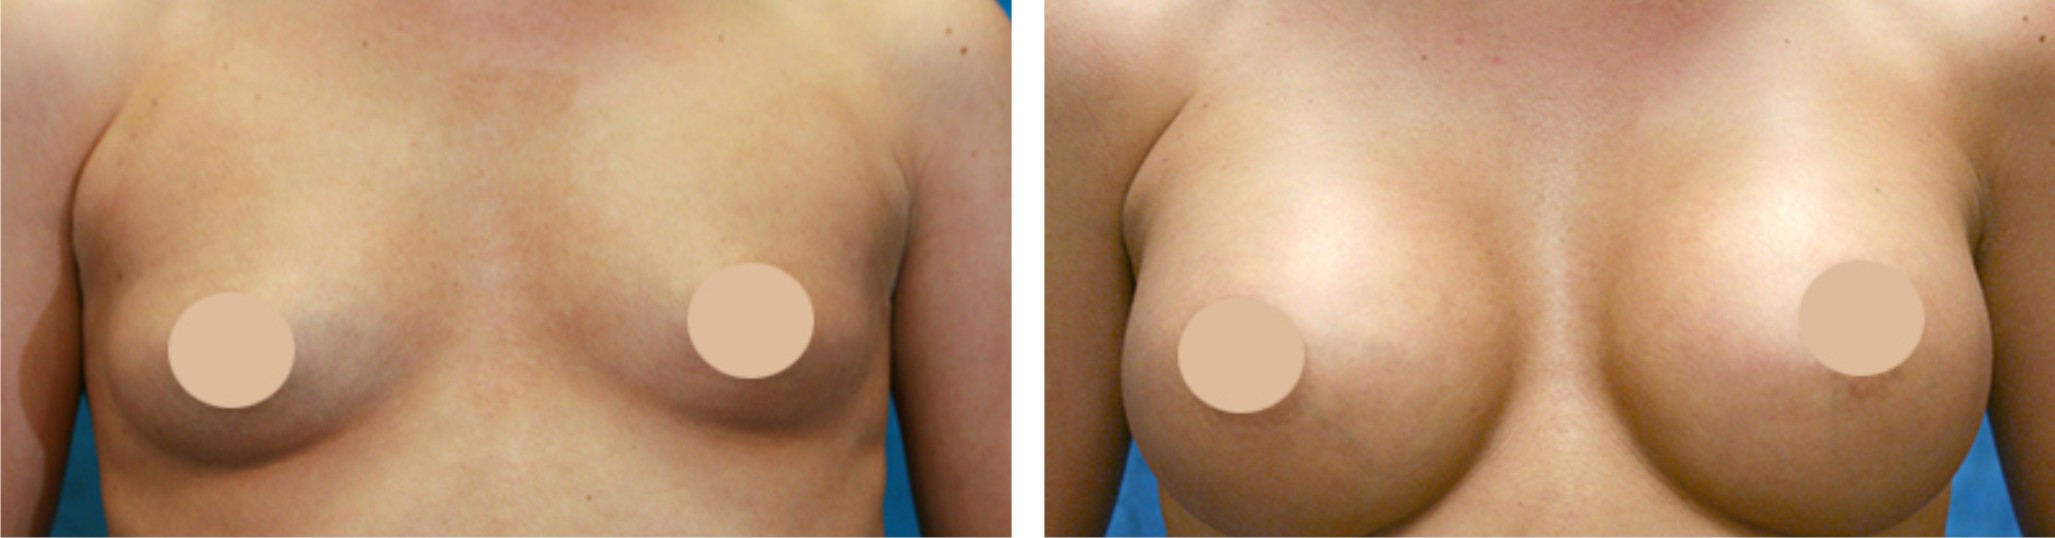 Breast Augmentation Image One